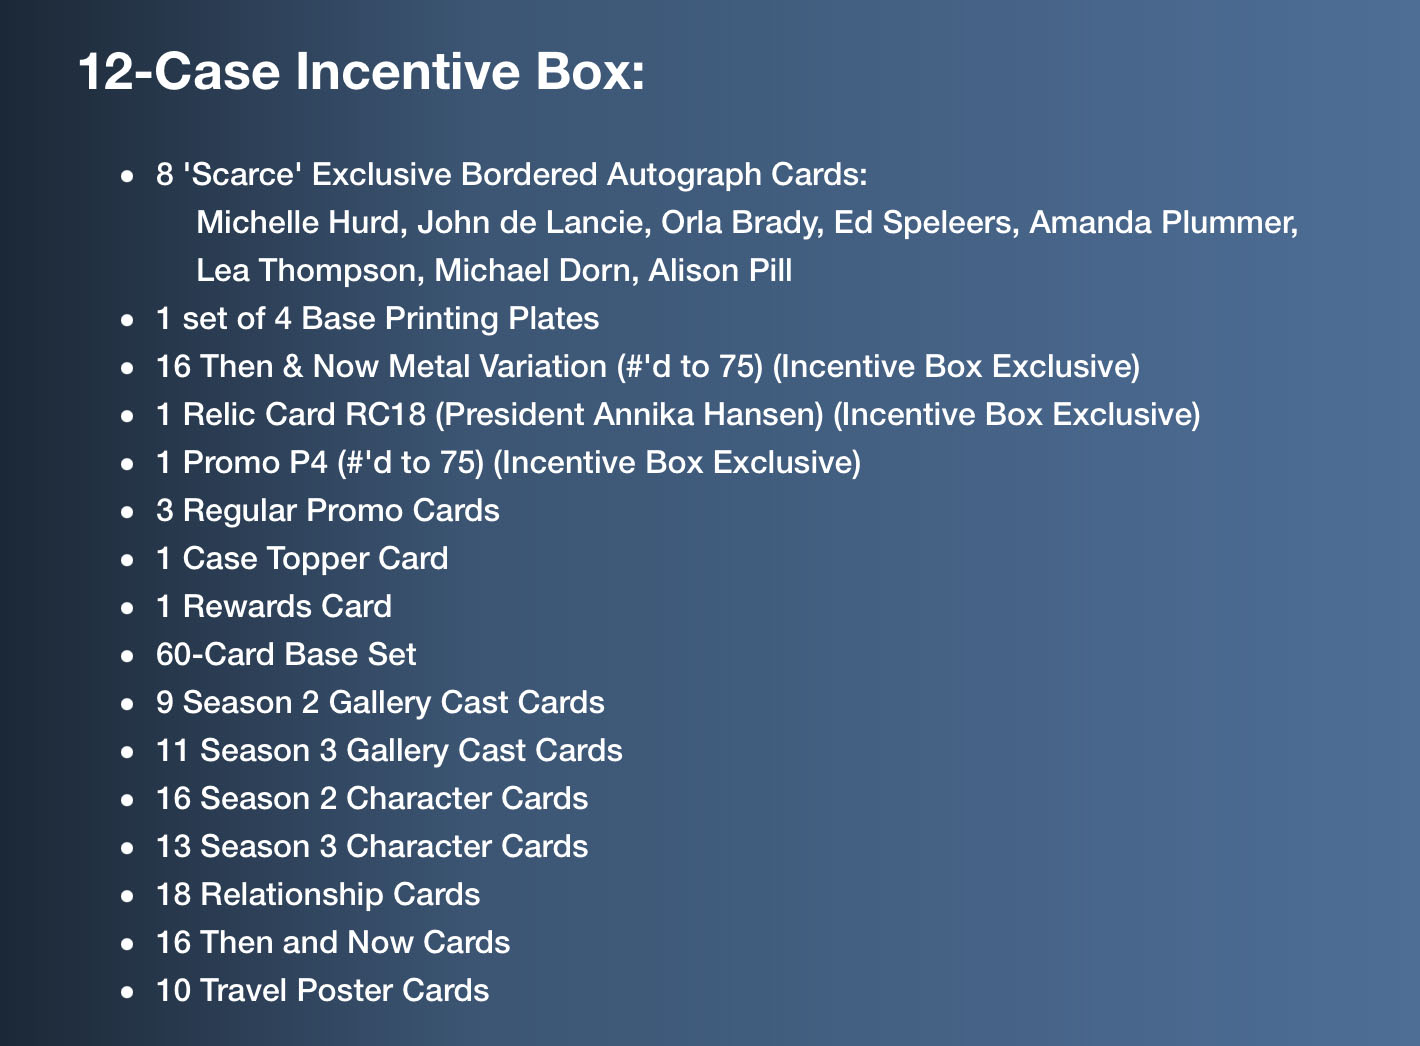 Incentive Box Contents